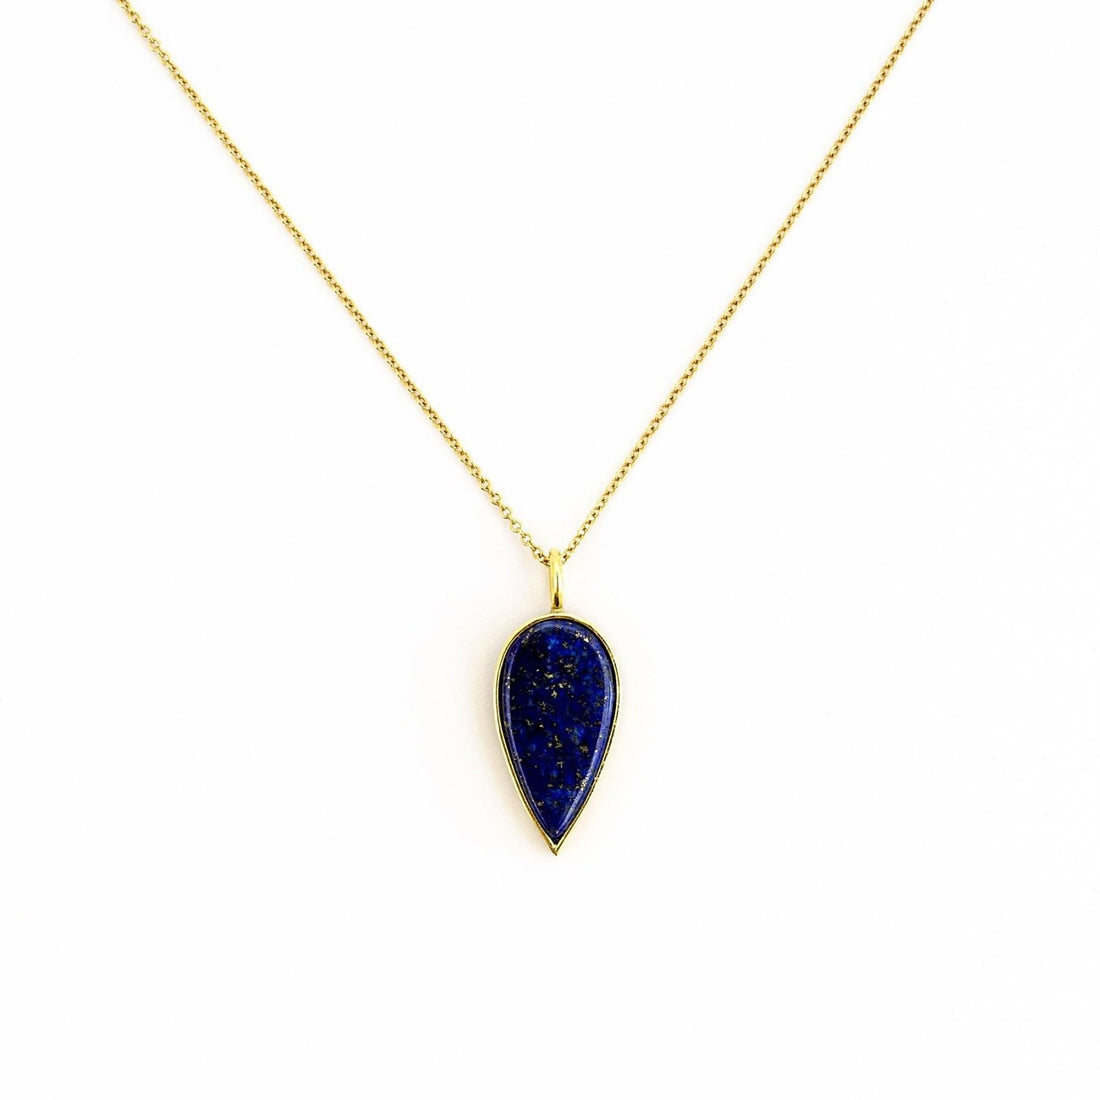 One of a Kind Lapis Necklace - Ele Keats Jewelry